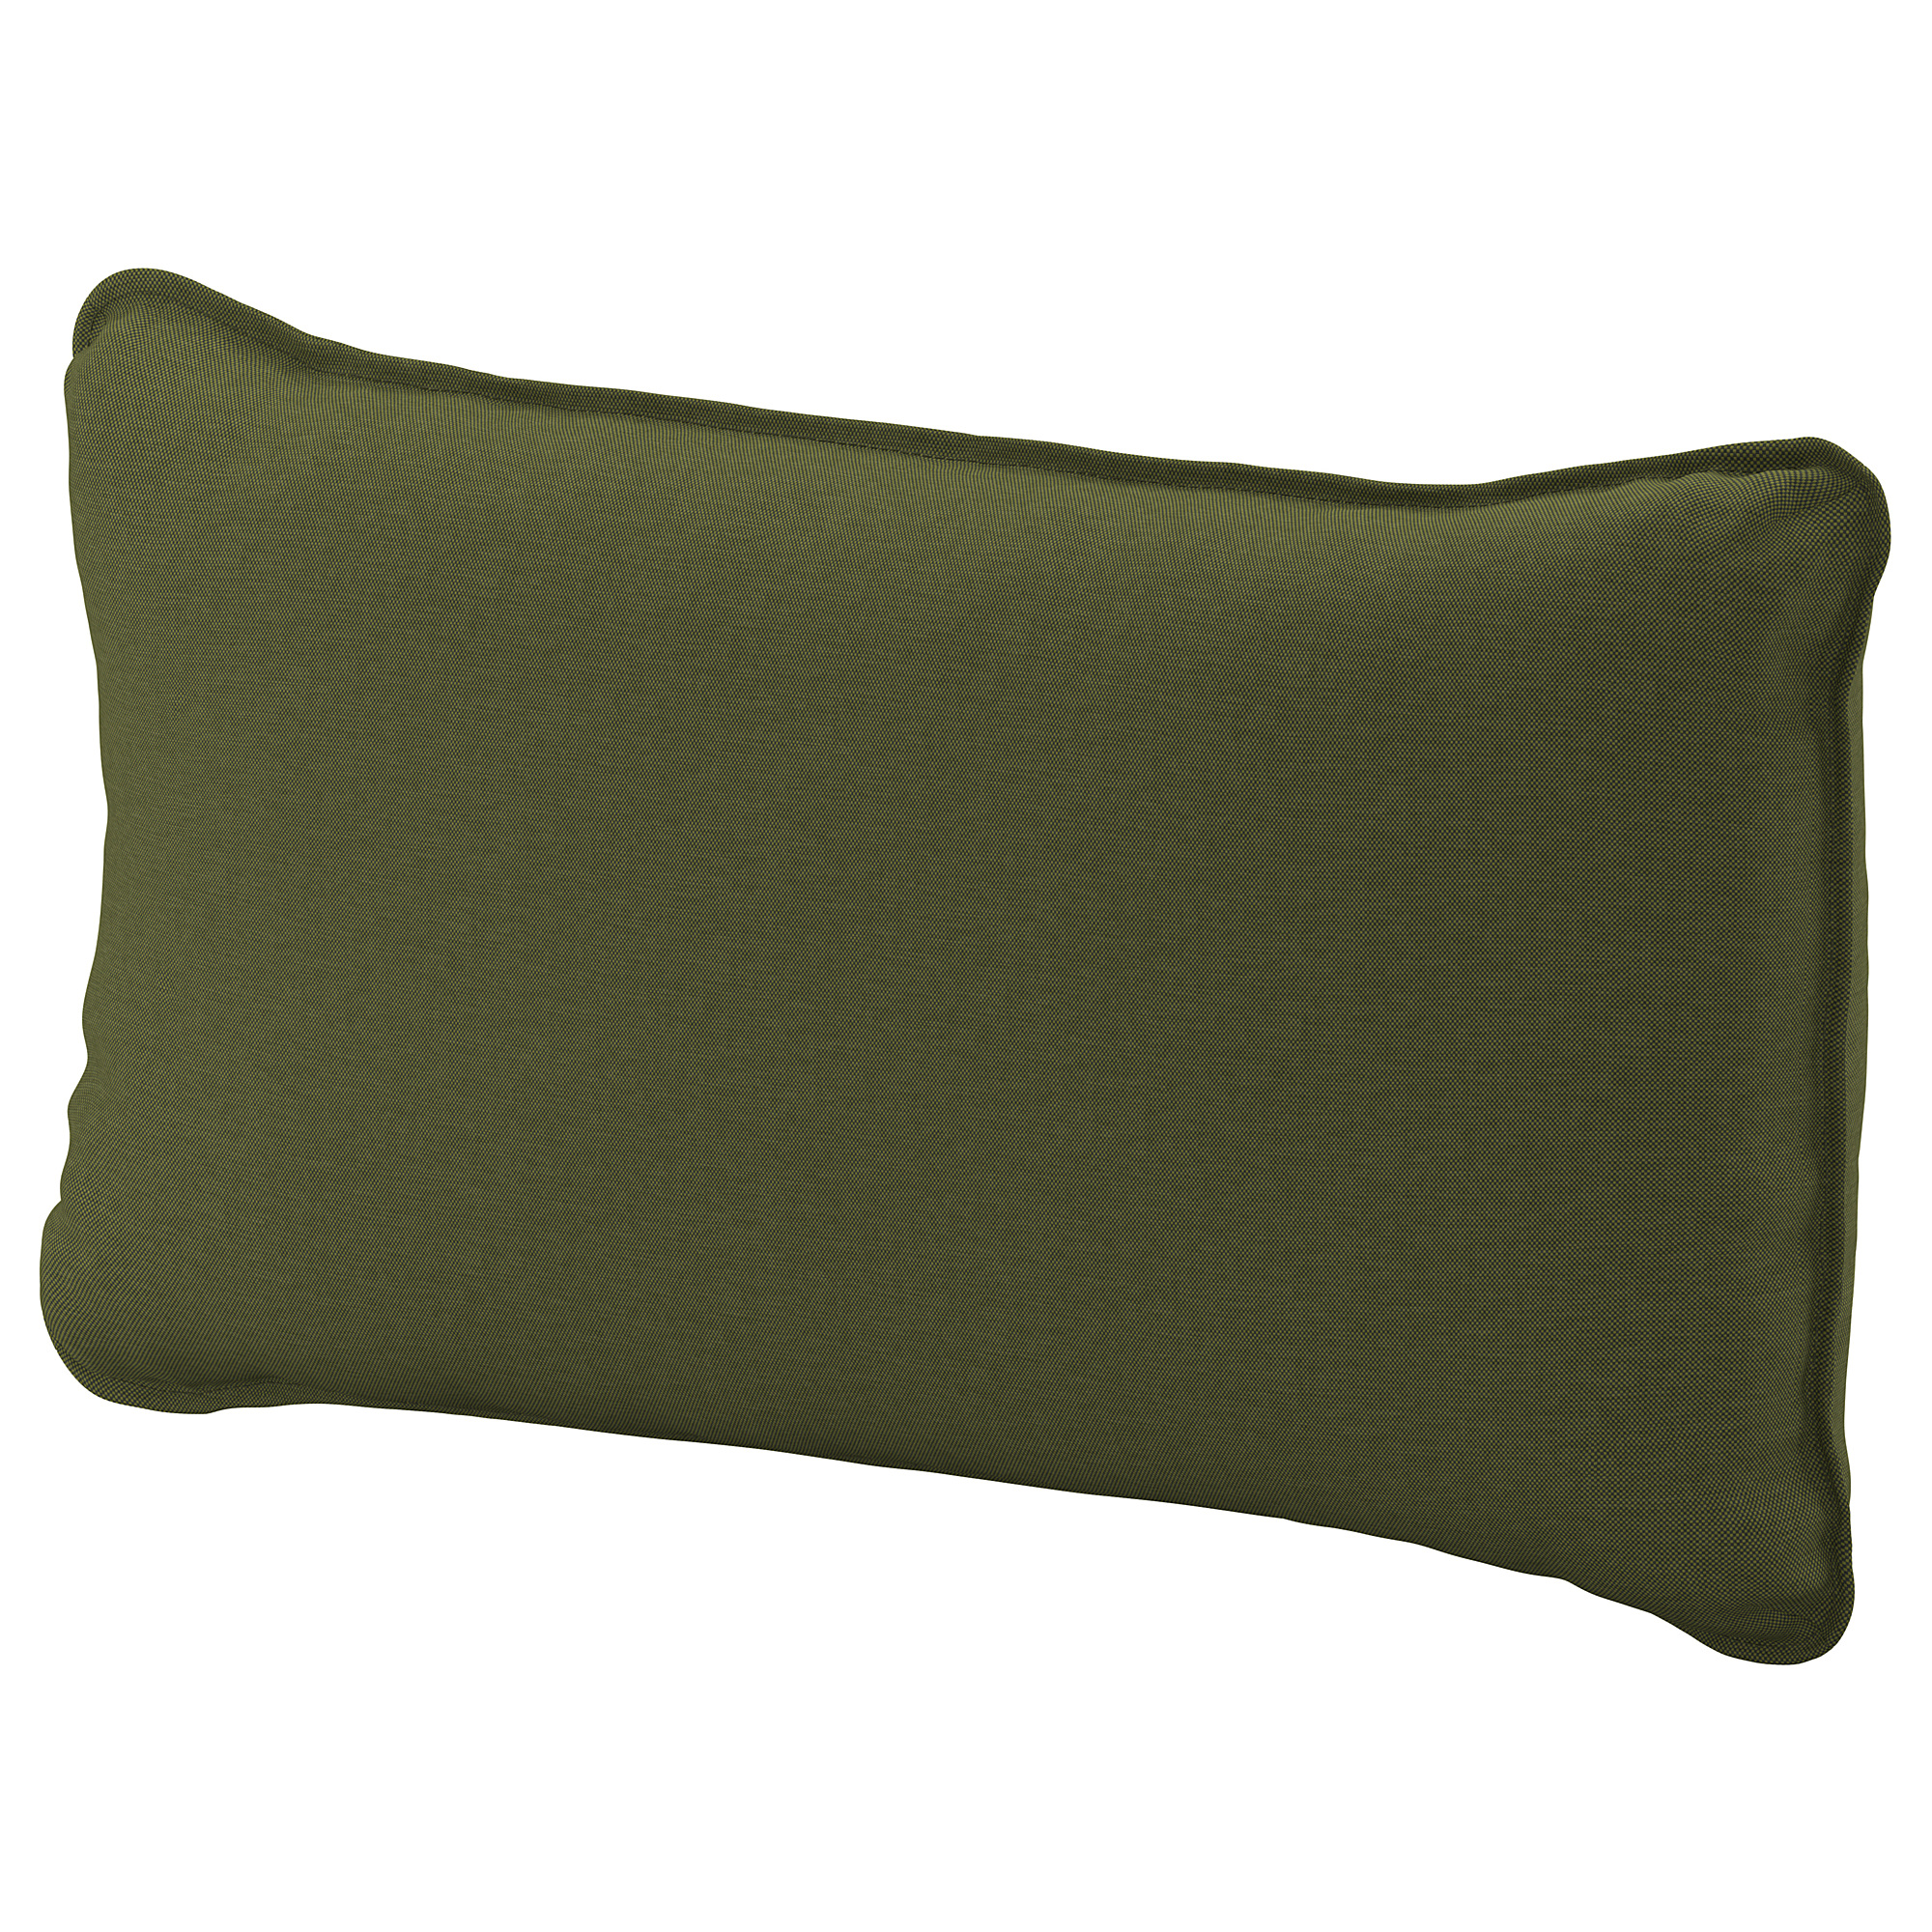 VALLENTUNA - cover for back cushion, Orrsta olive-green | IKEA Hong ...